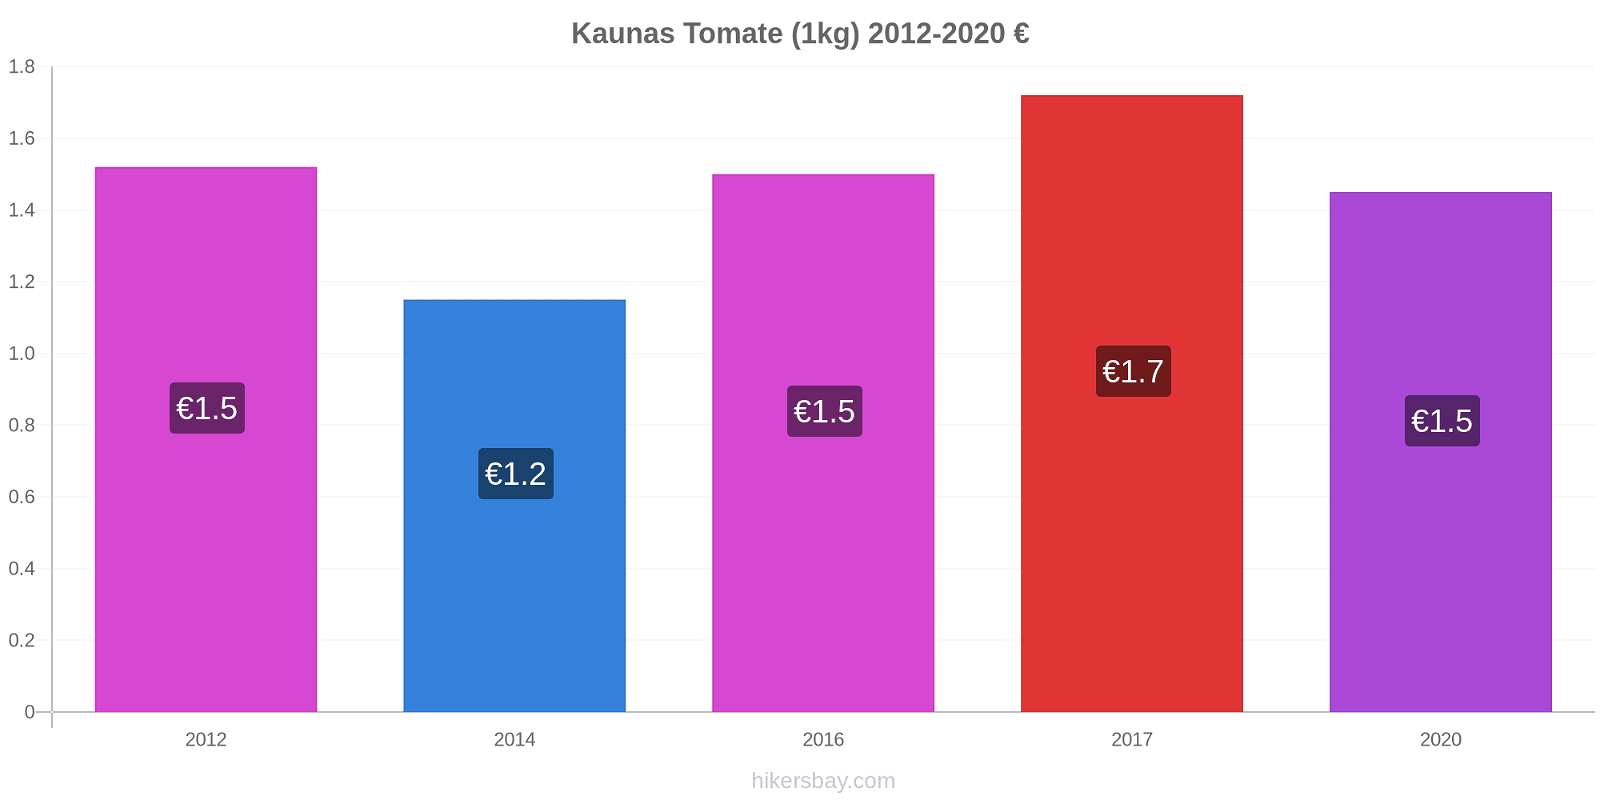 Kaunas cambios de precios Tomate (1kg) hikersbay.com